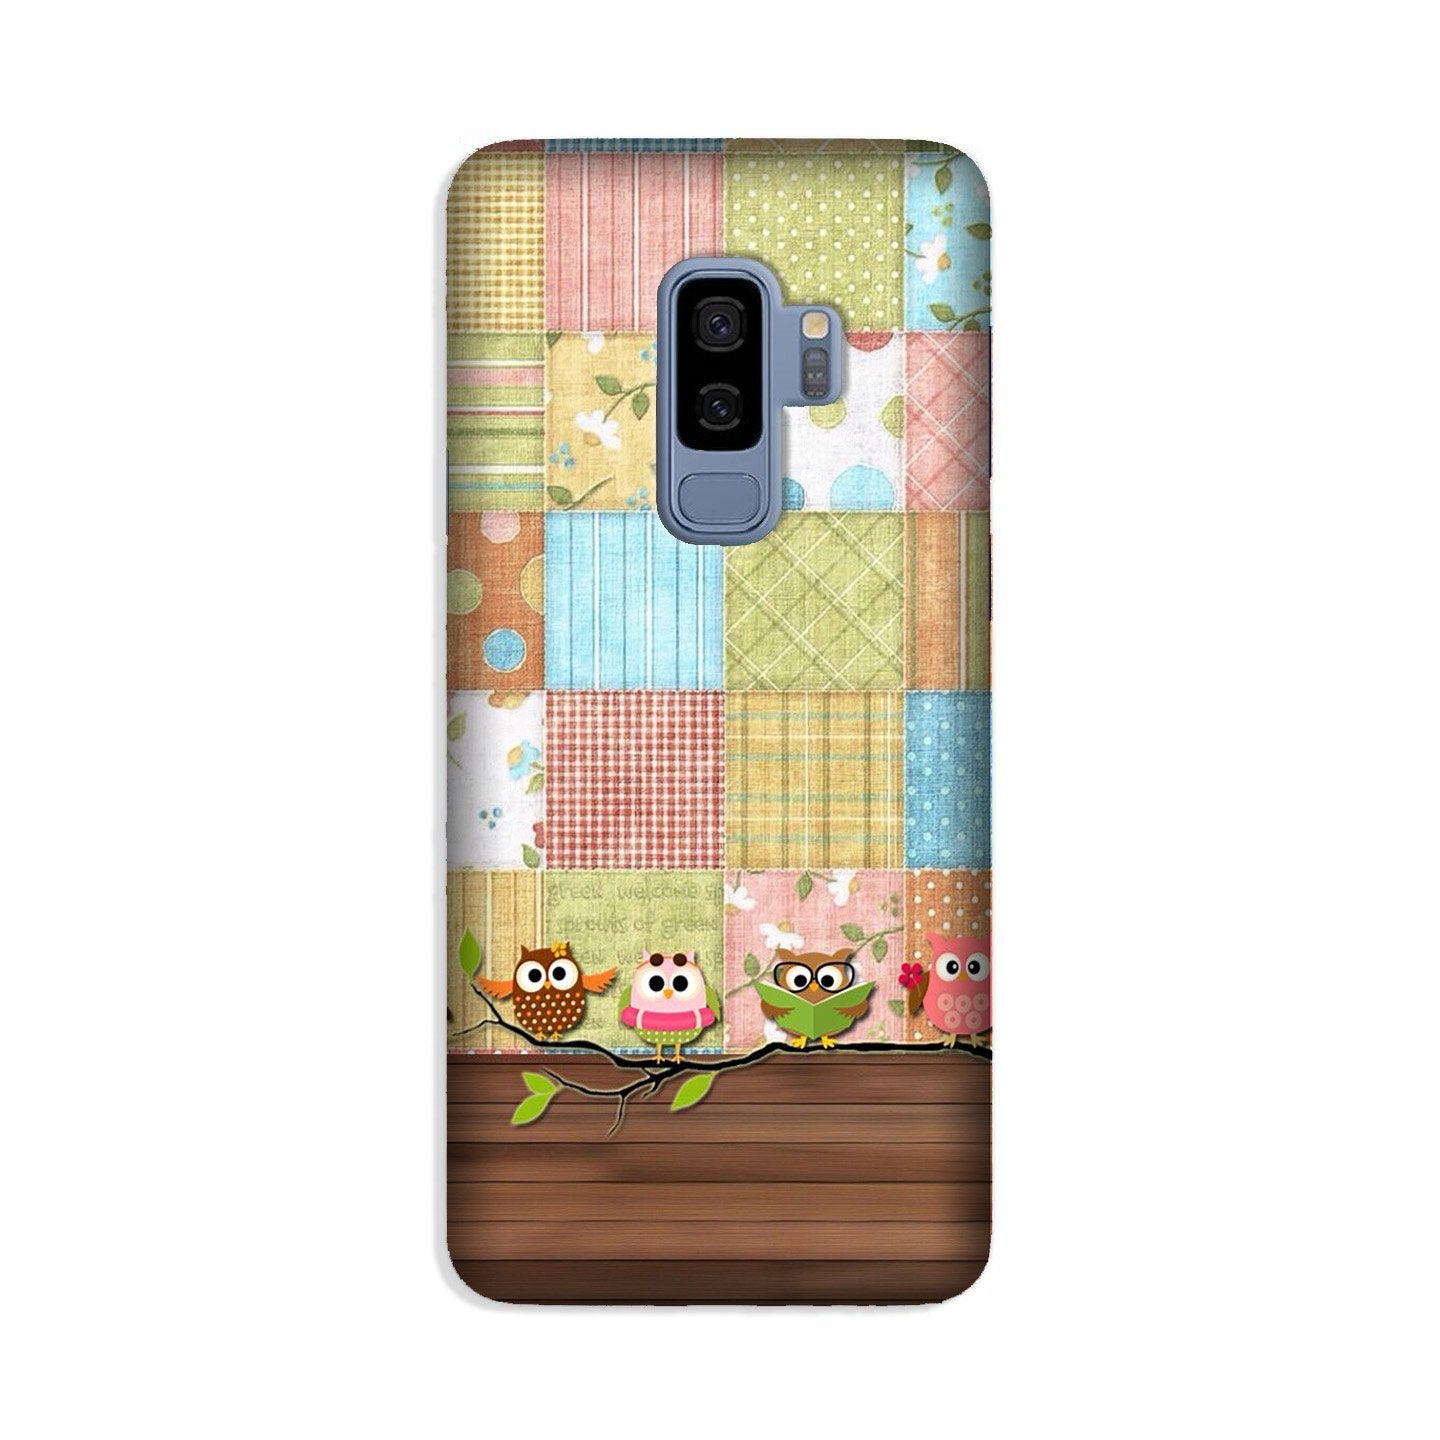 Owls Case for Galaxy S9 Plus (Design - 202)